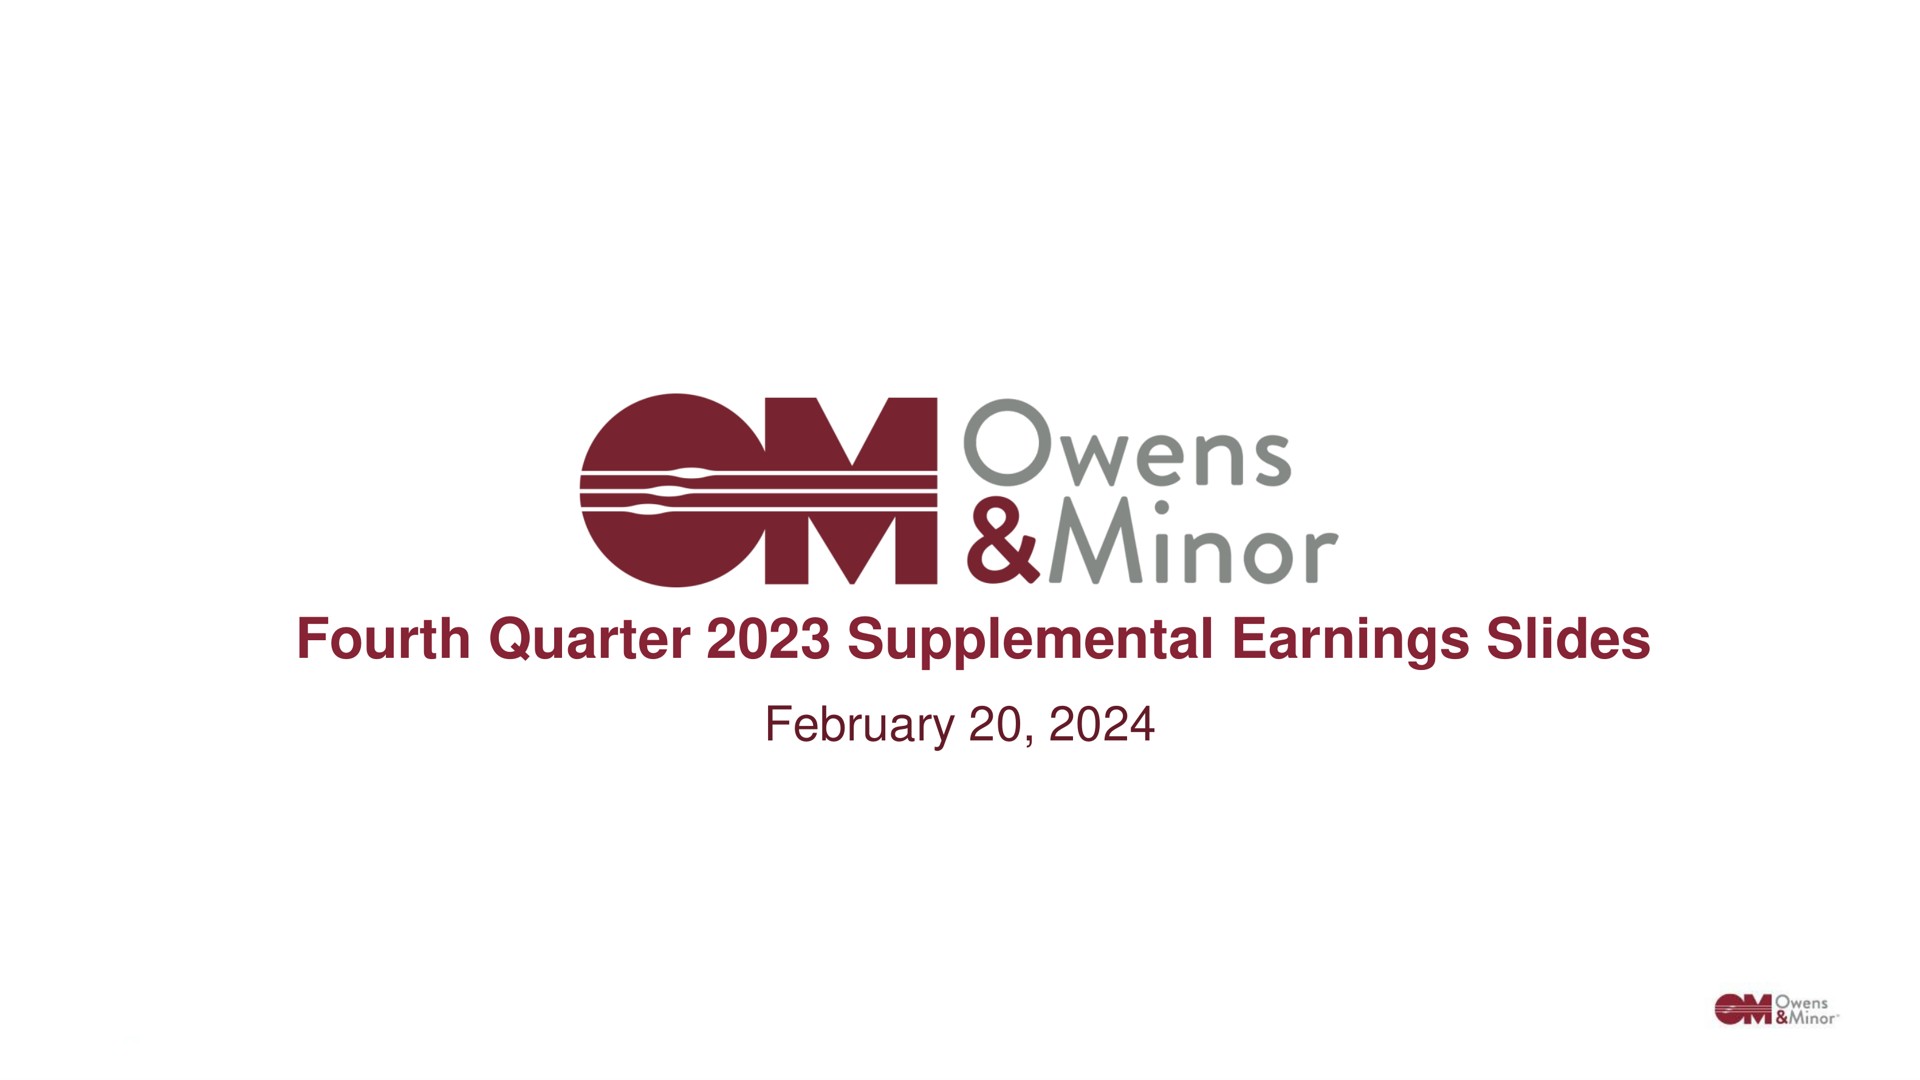 fourth quarter supplemental earnings slides weve minor | Owens&Minor